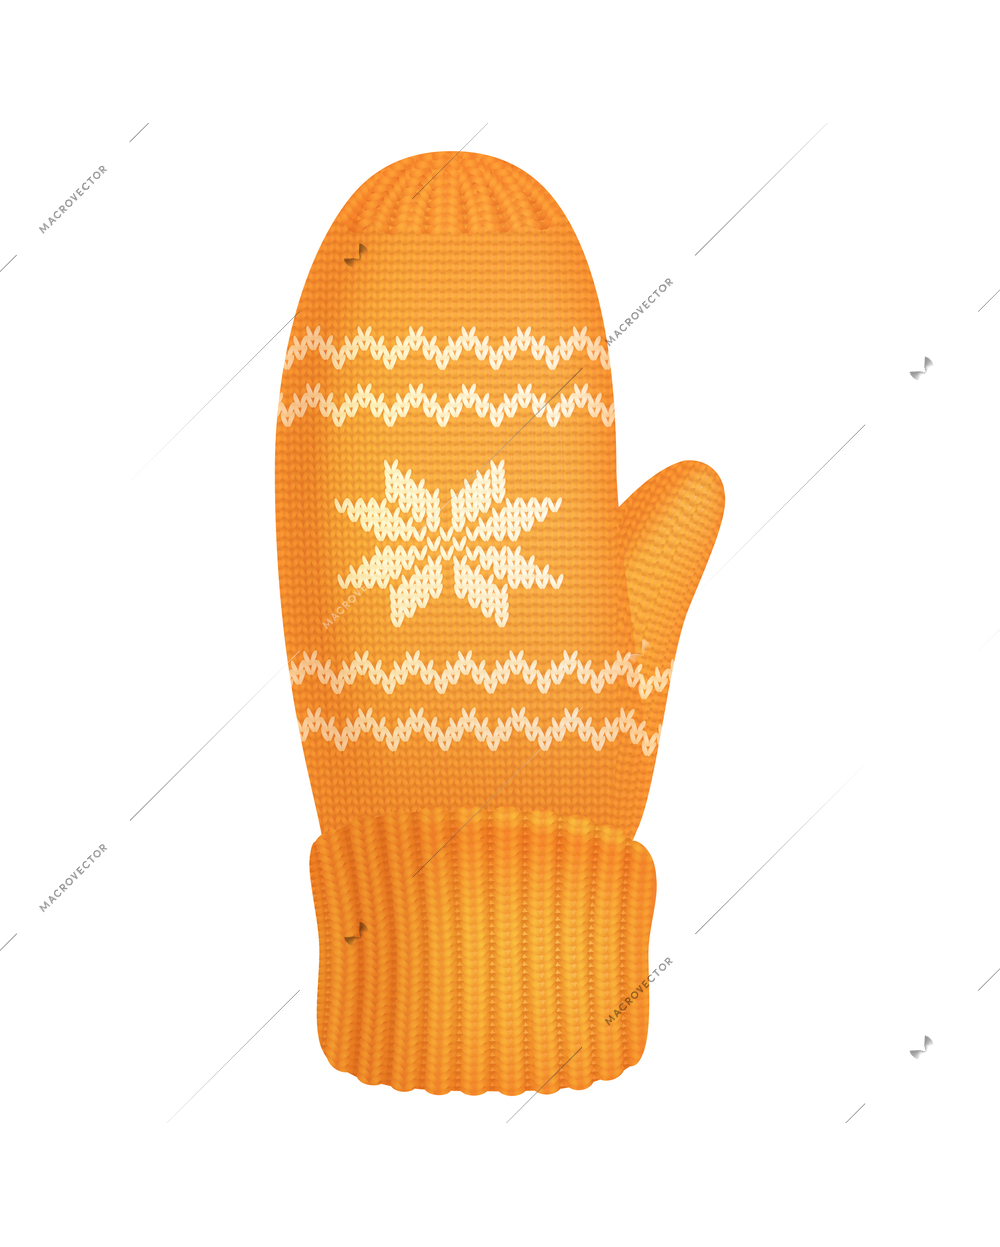 Realistic winter knitted orange mitten vector illustration